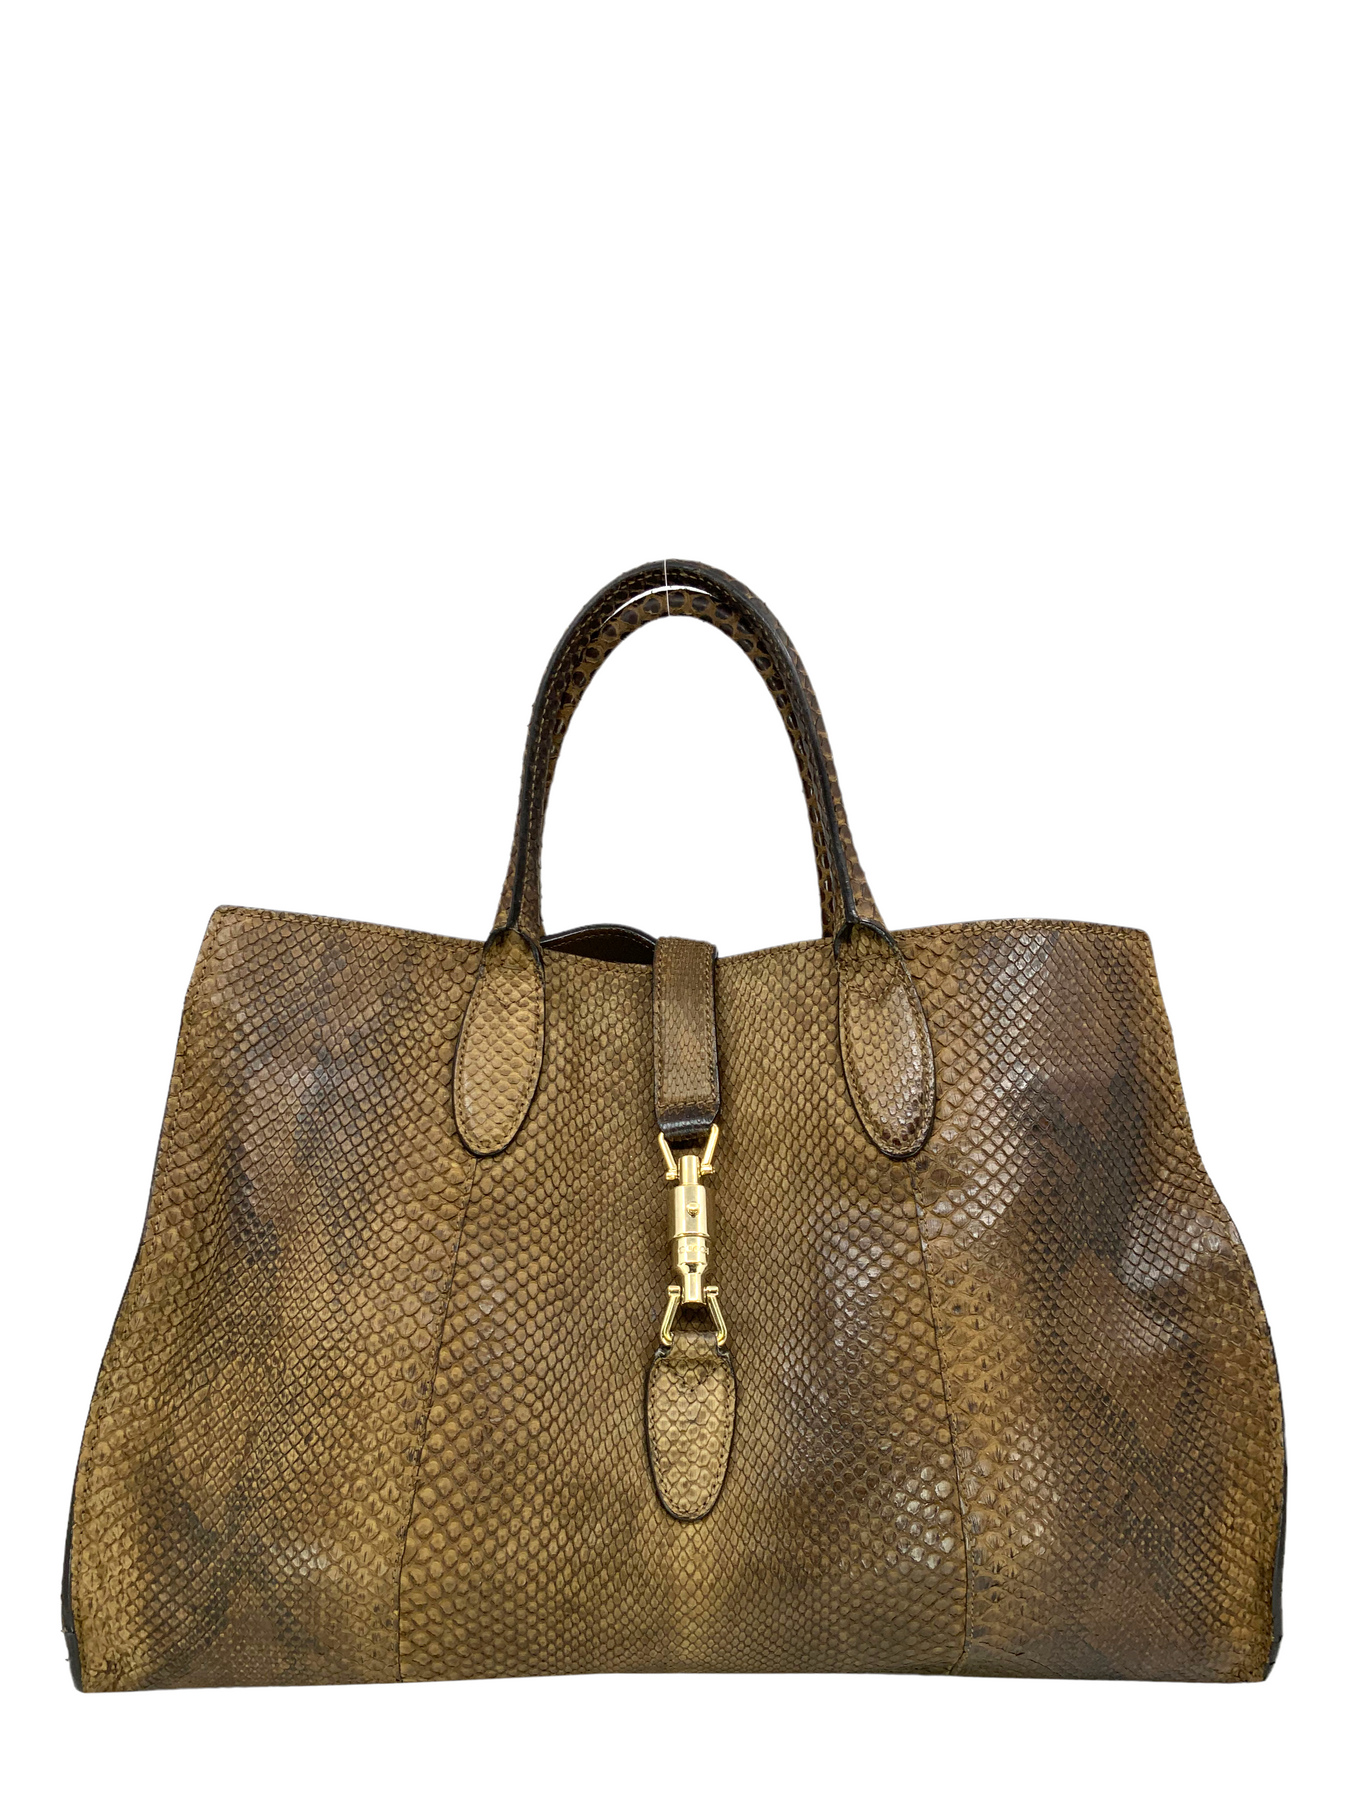 Gucci Padlock Small Python Shoulder Bag - Consigned Designs